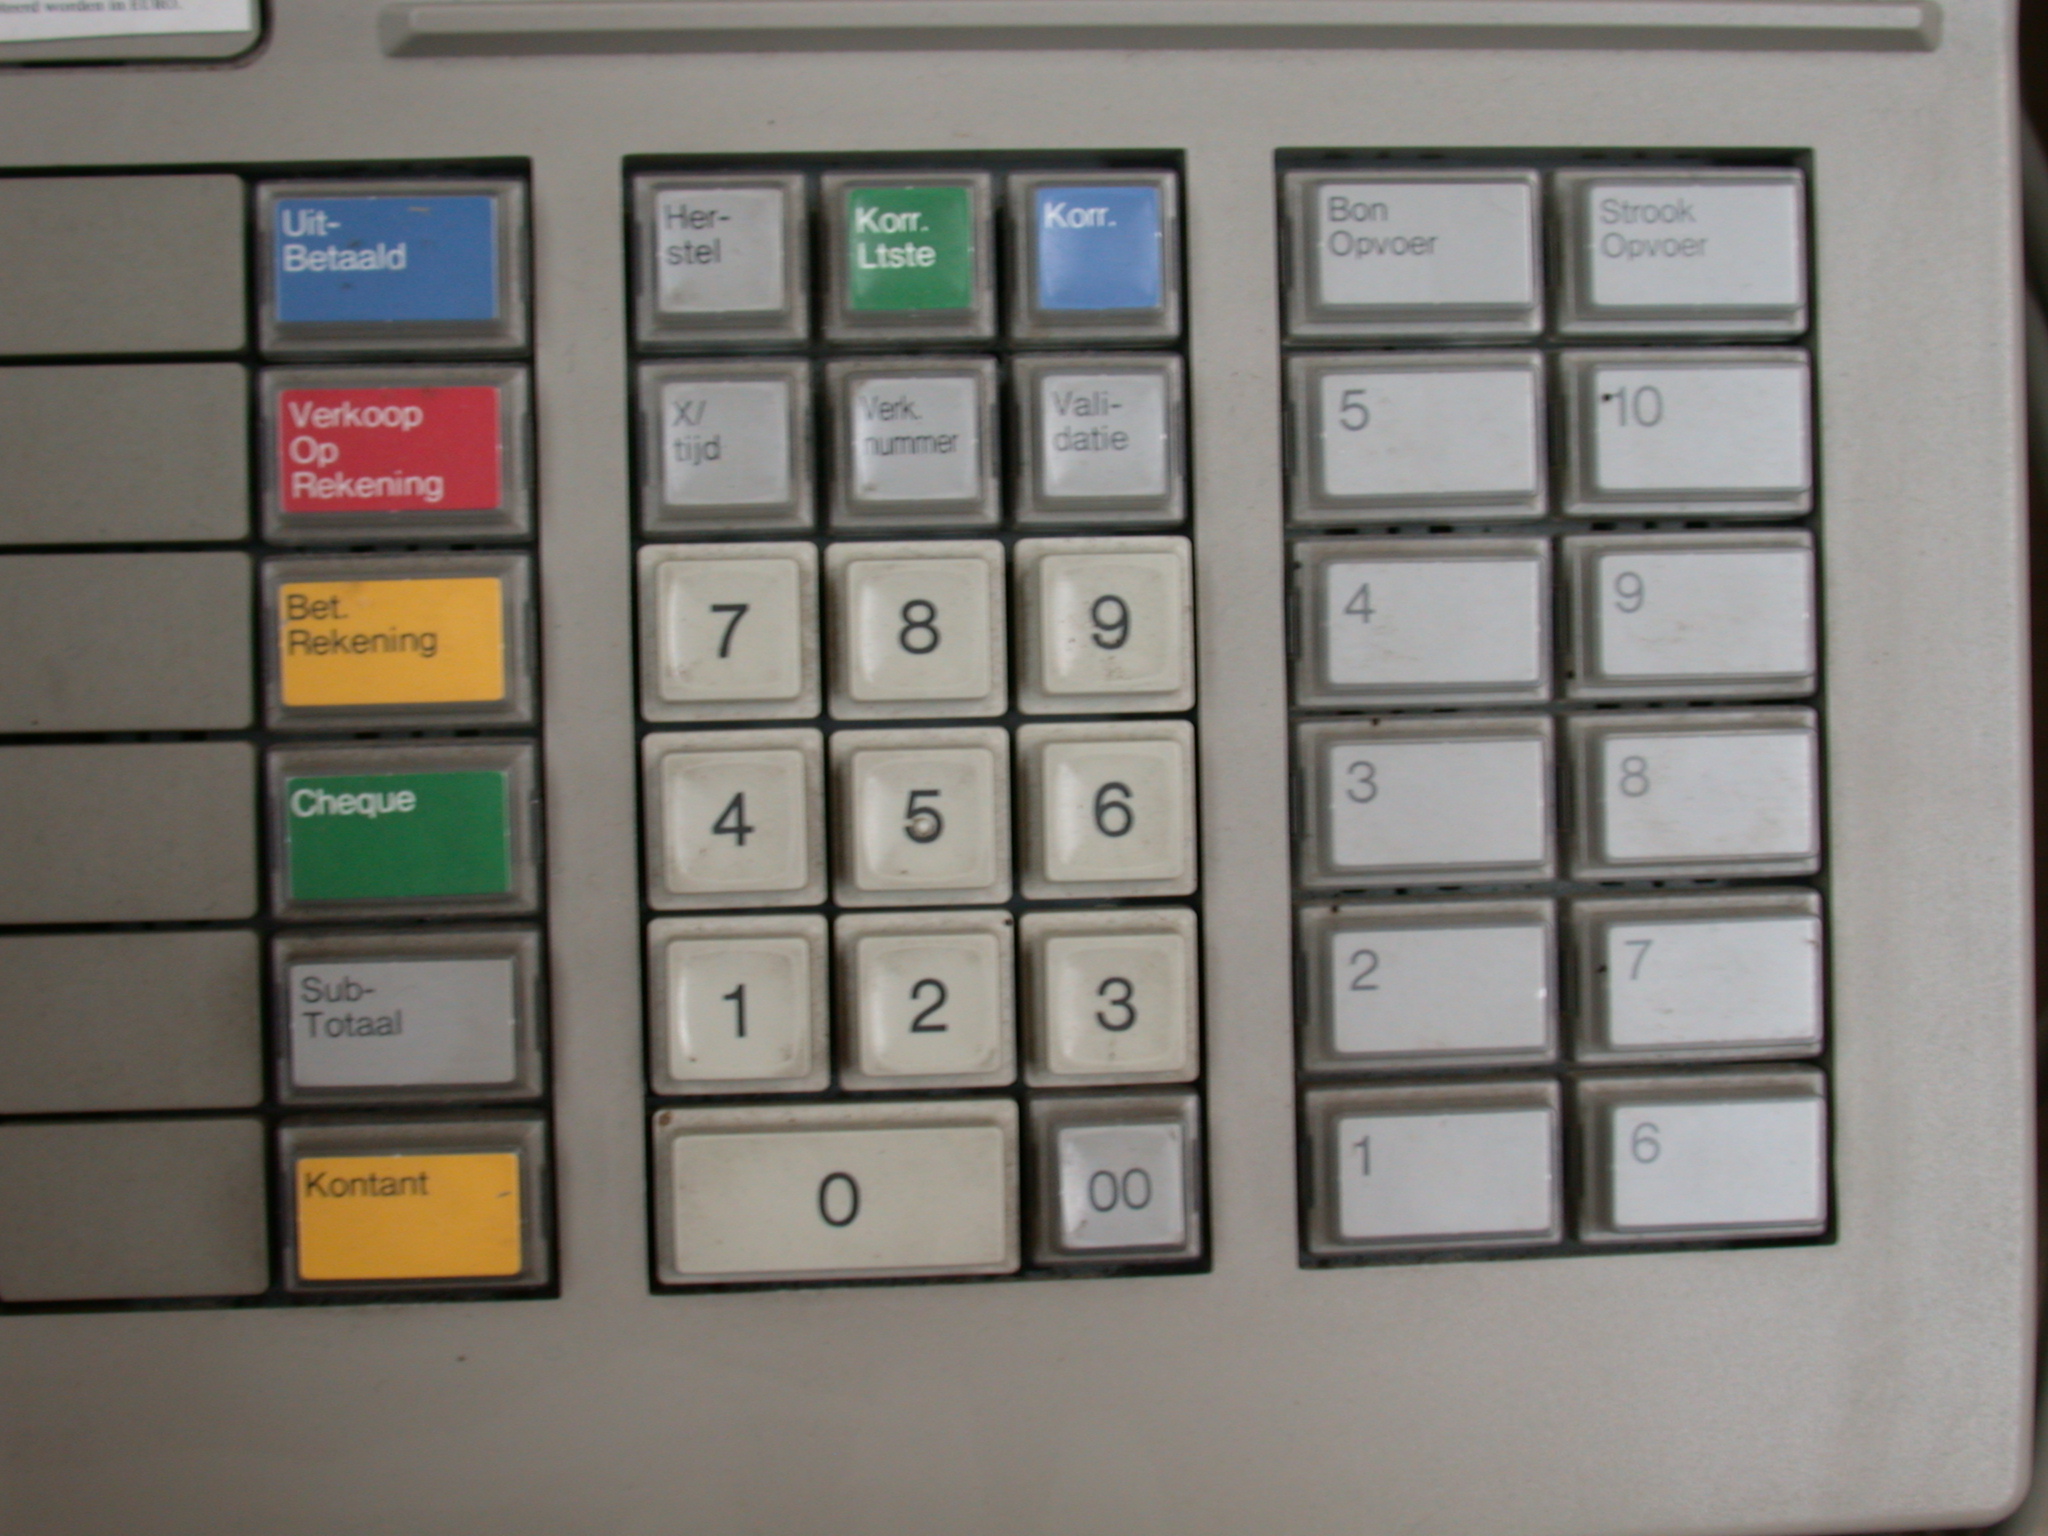 objects circuits keyboard numbers keypad casregister register